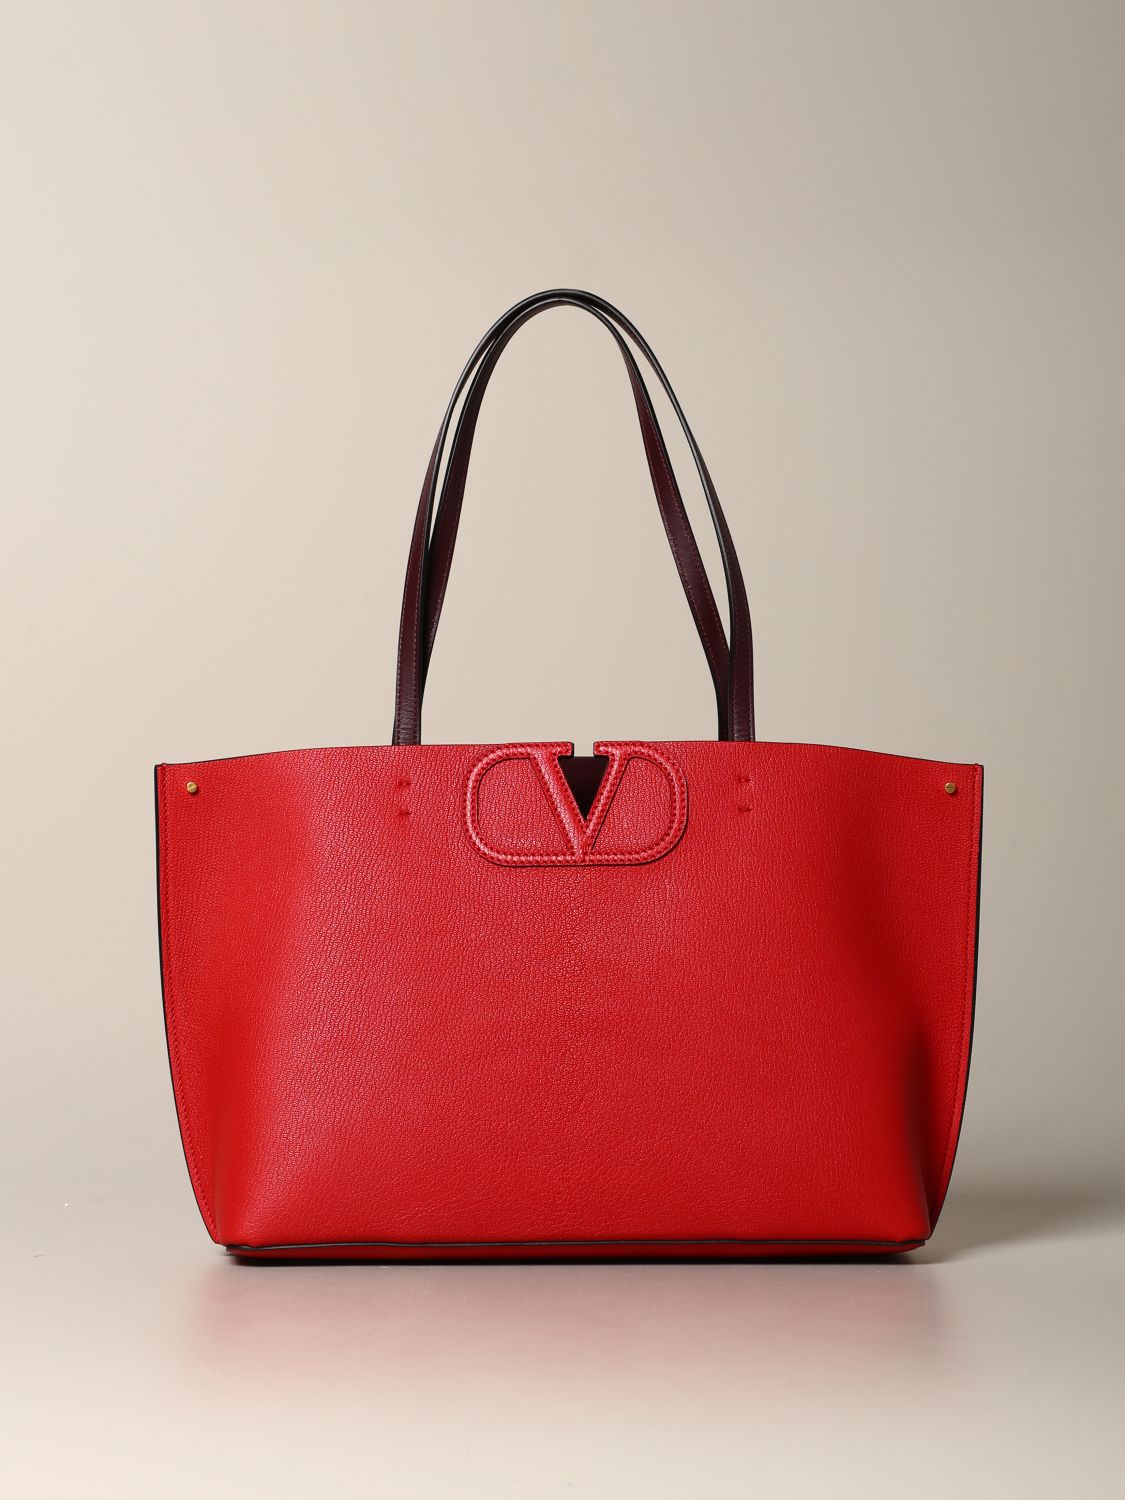 Far Varme fly Valentino Garavani Outlet: Medium shopping bag in leather - Red | Valentino  Garavani tote bags TW2B0F95 FQJ online at GIGLIO.COM